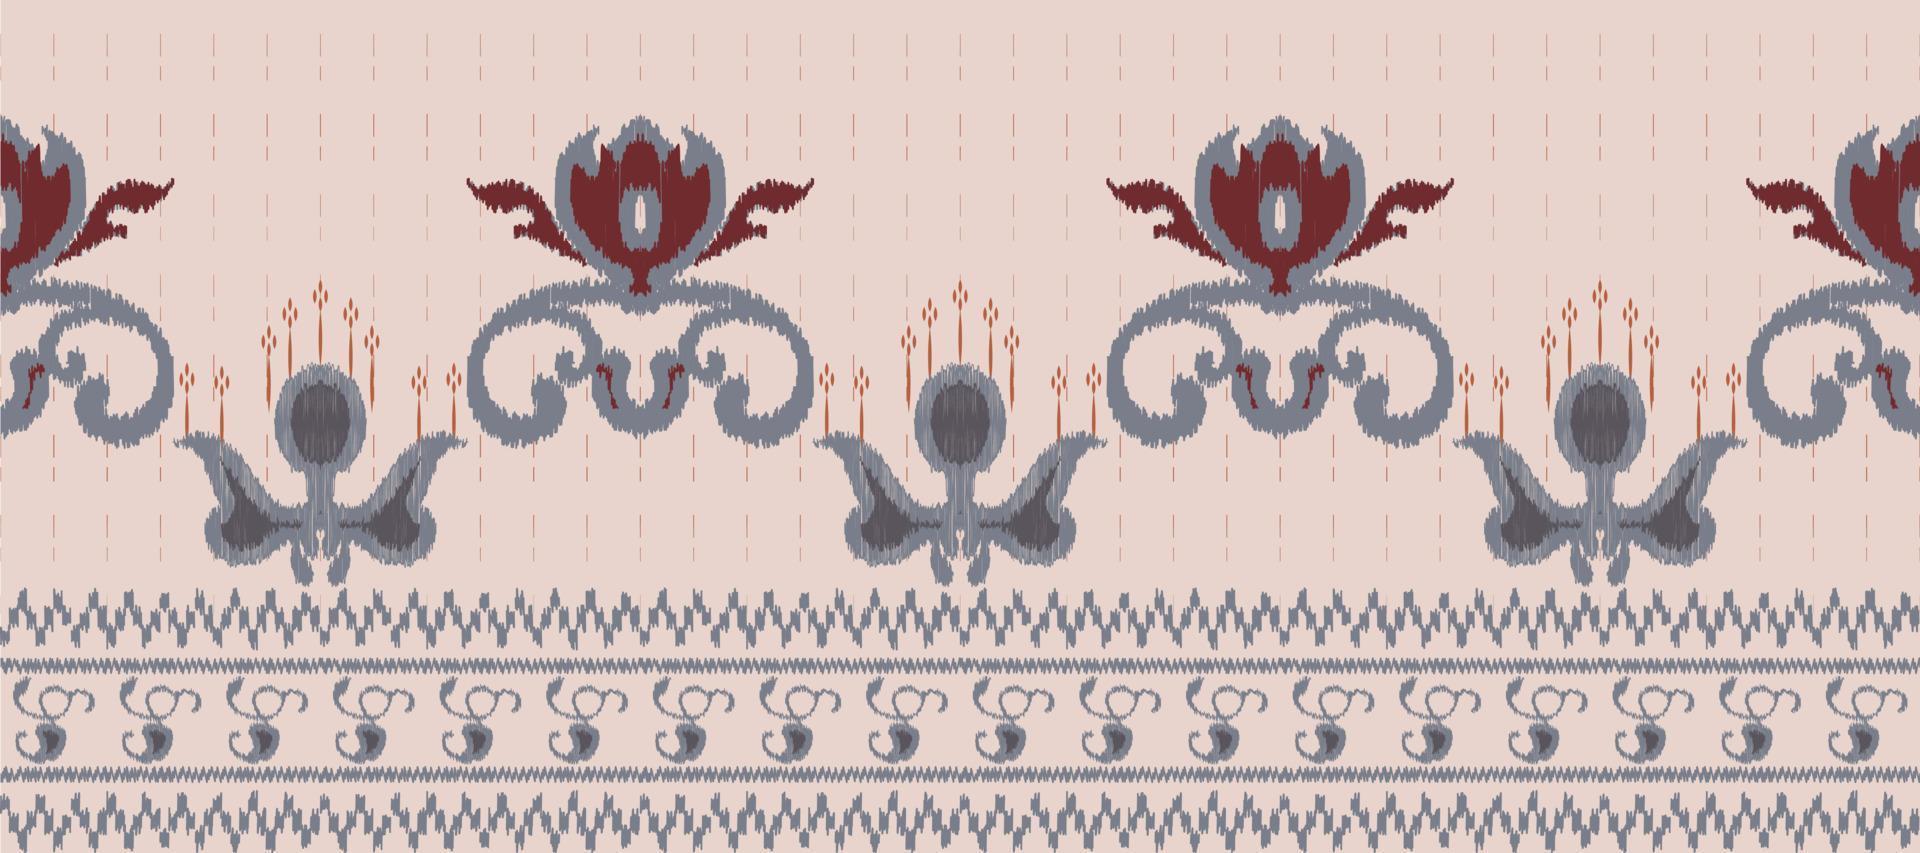 africano ikat cachemir bordado. batik textil ikat antecedentes sin costura modelo digital vector diseño para impresión sari curti borneo tela frontera cepillo fiesta vestir